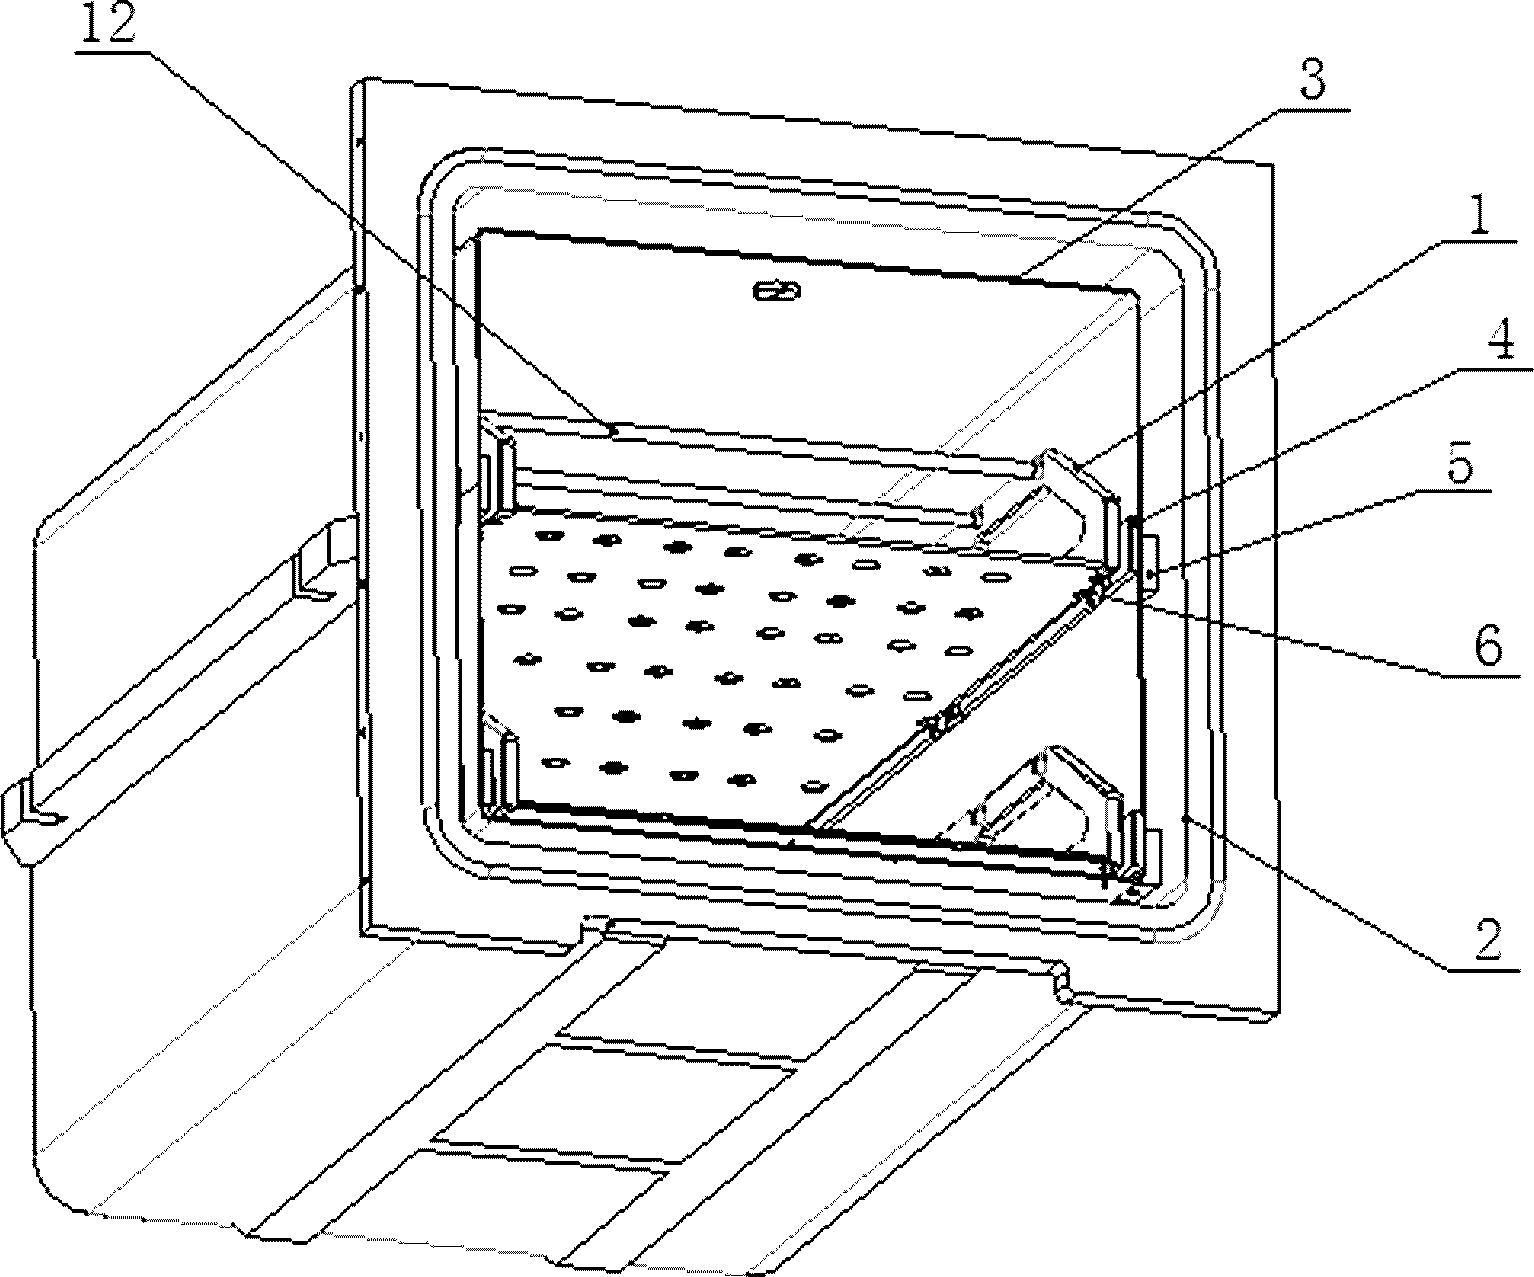 Hydrogen peroxide plasma sterilizer of square sterilization bin with convenience in fixing placement basket